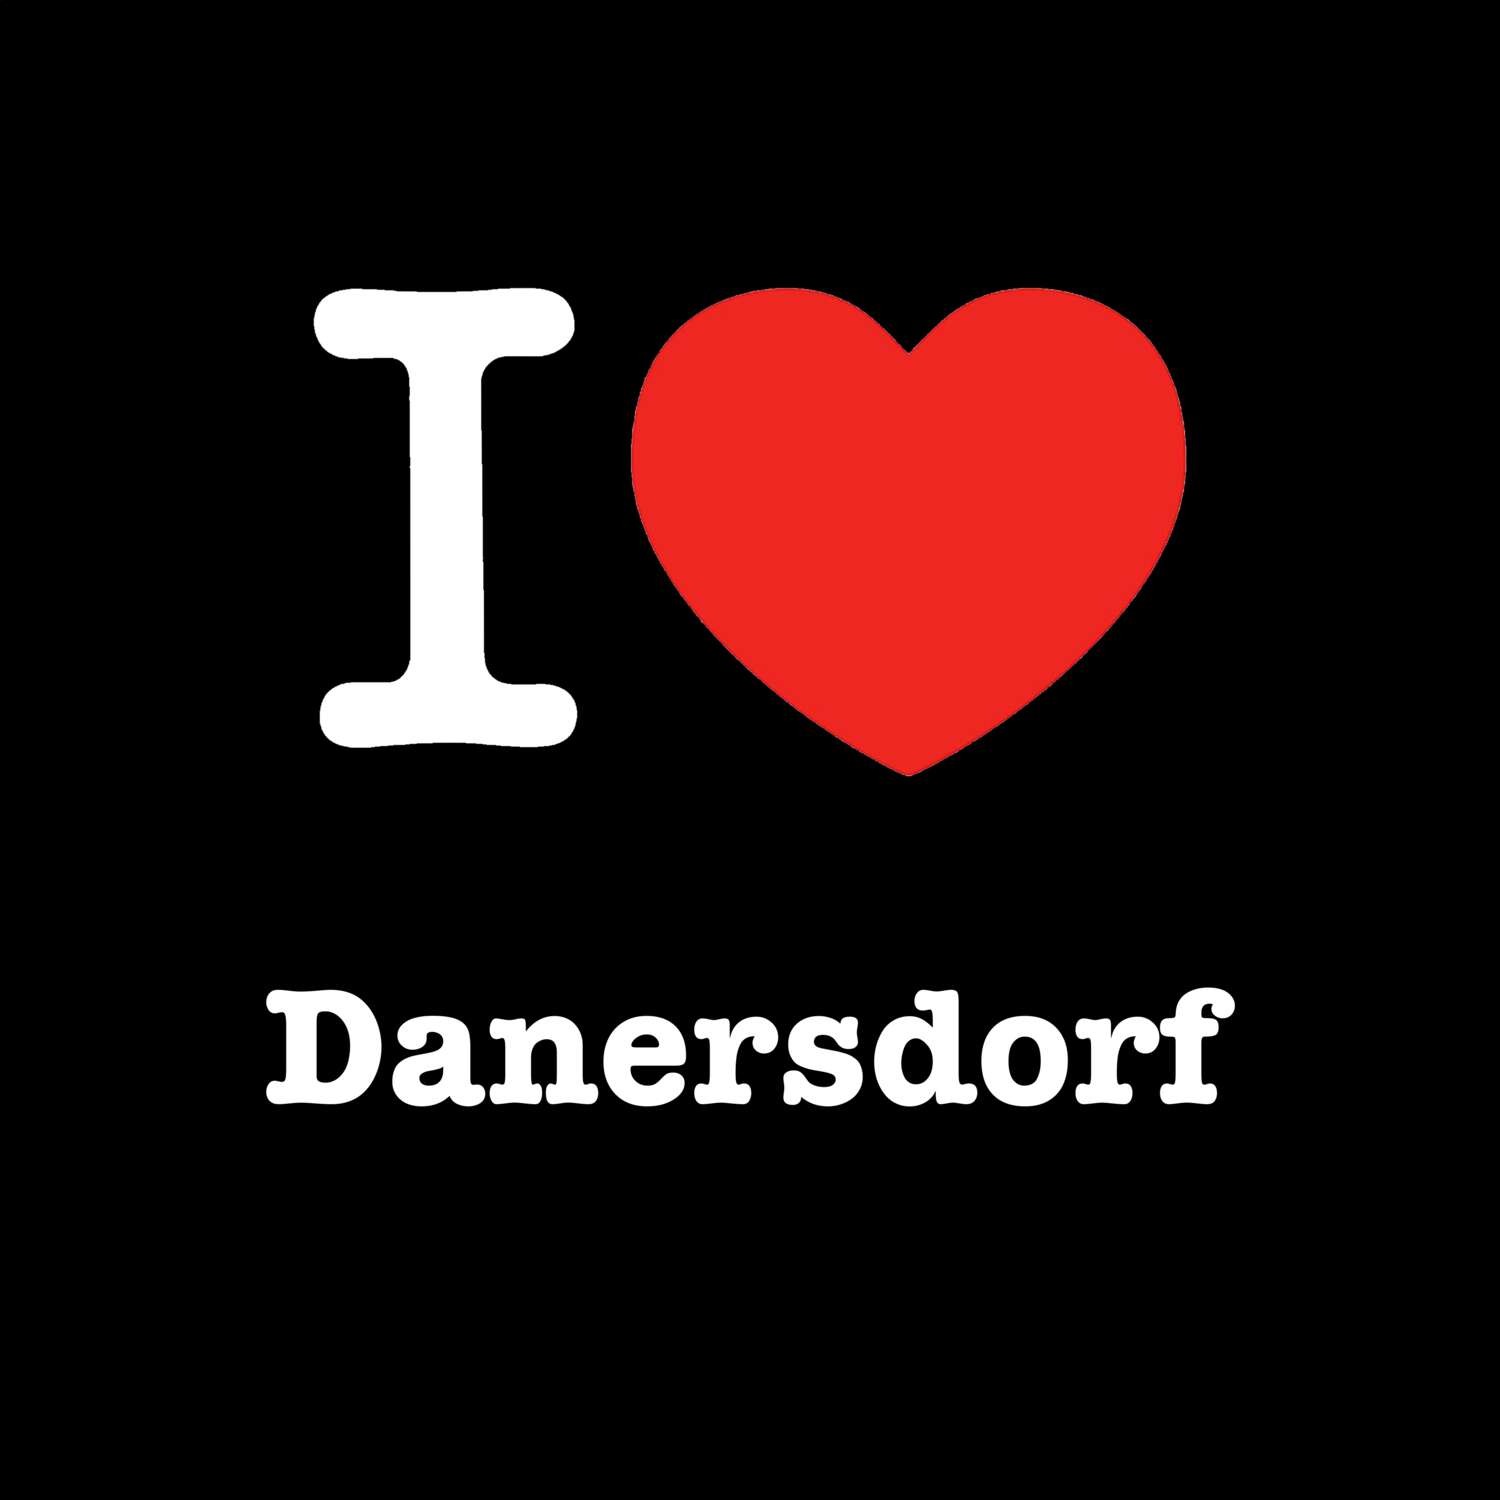 Danersdorf T-Shirt »I love«